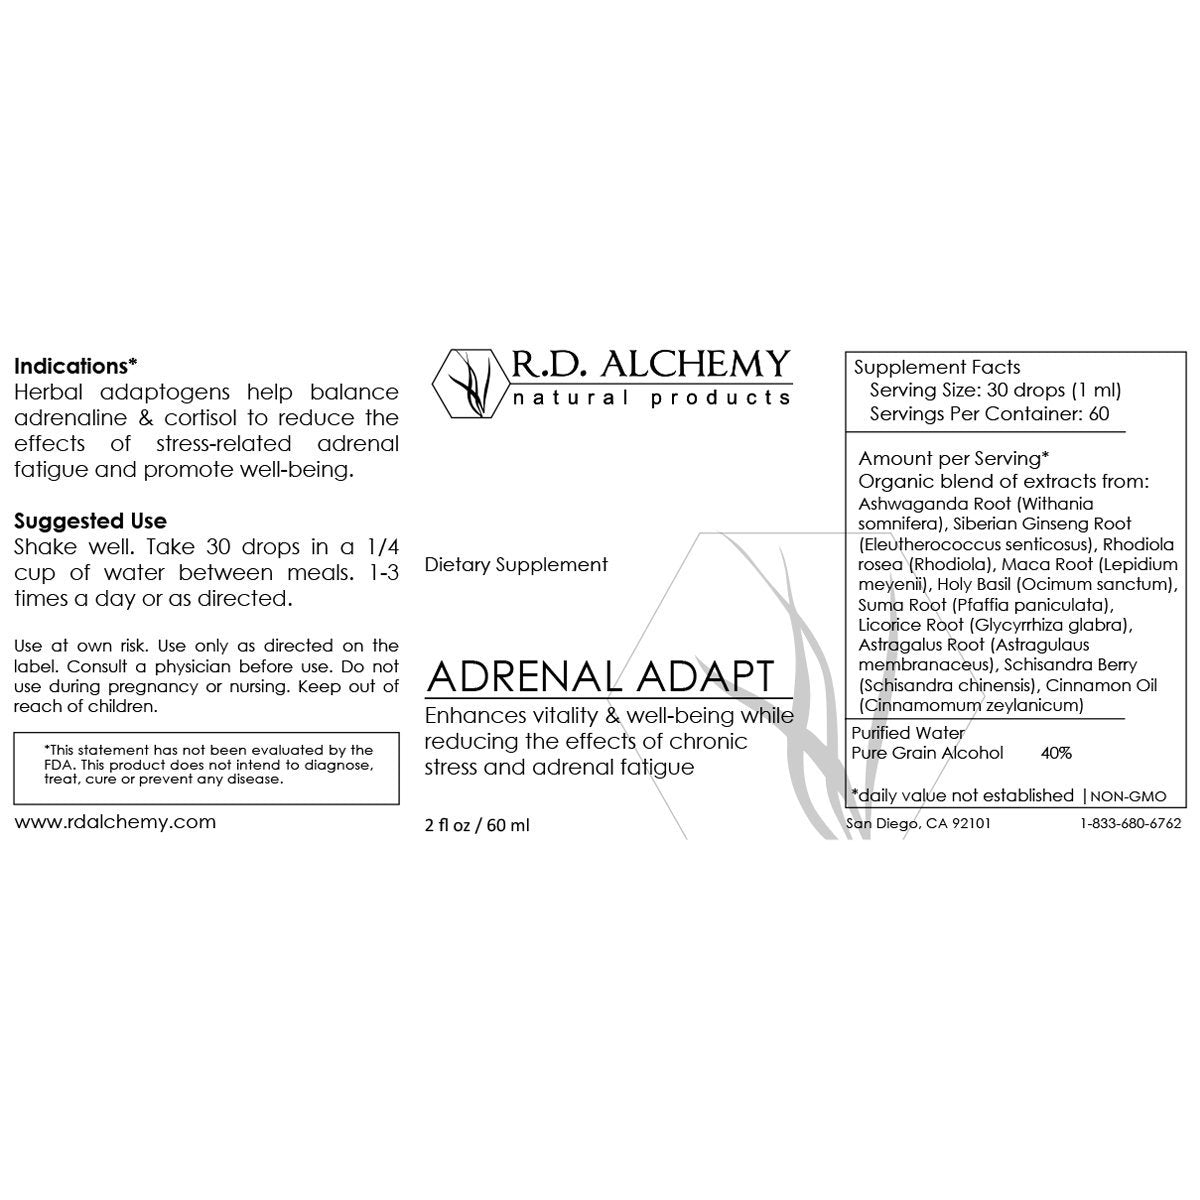 Adrenal Adapt Extract